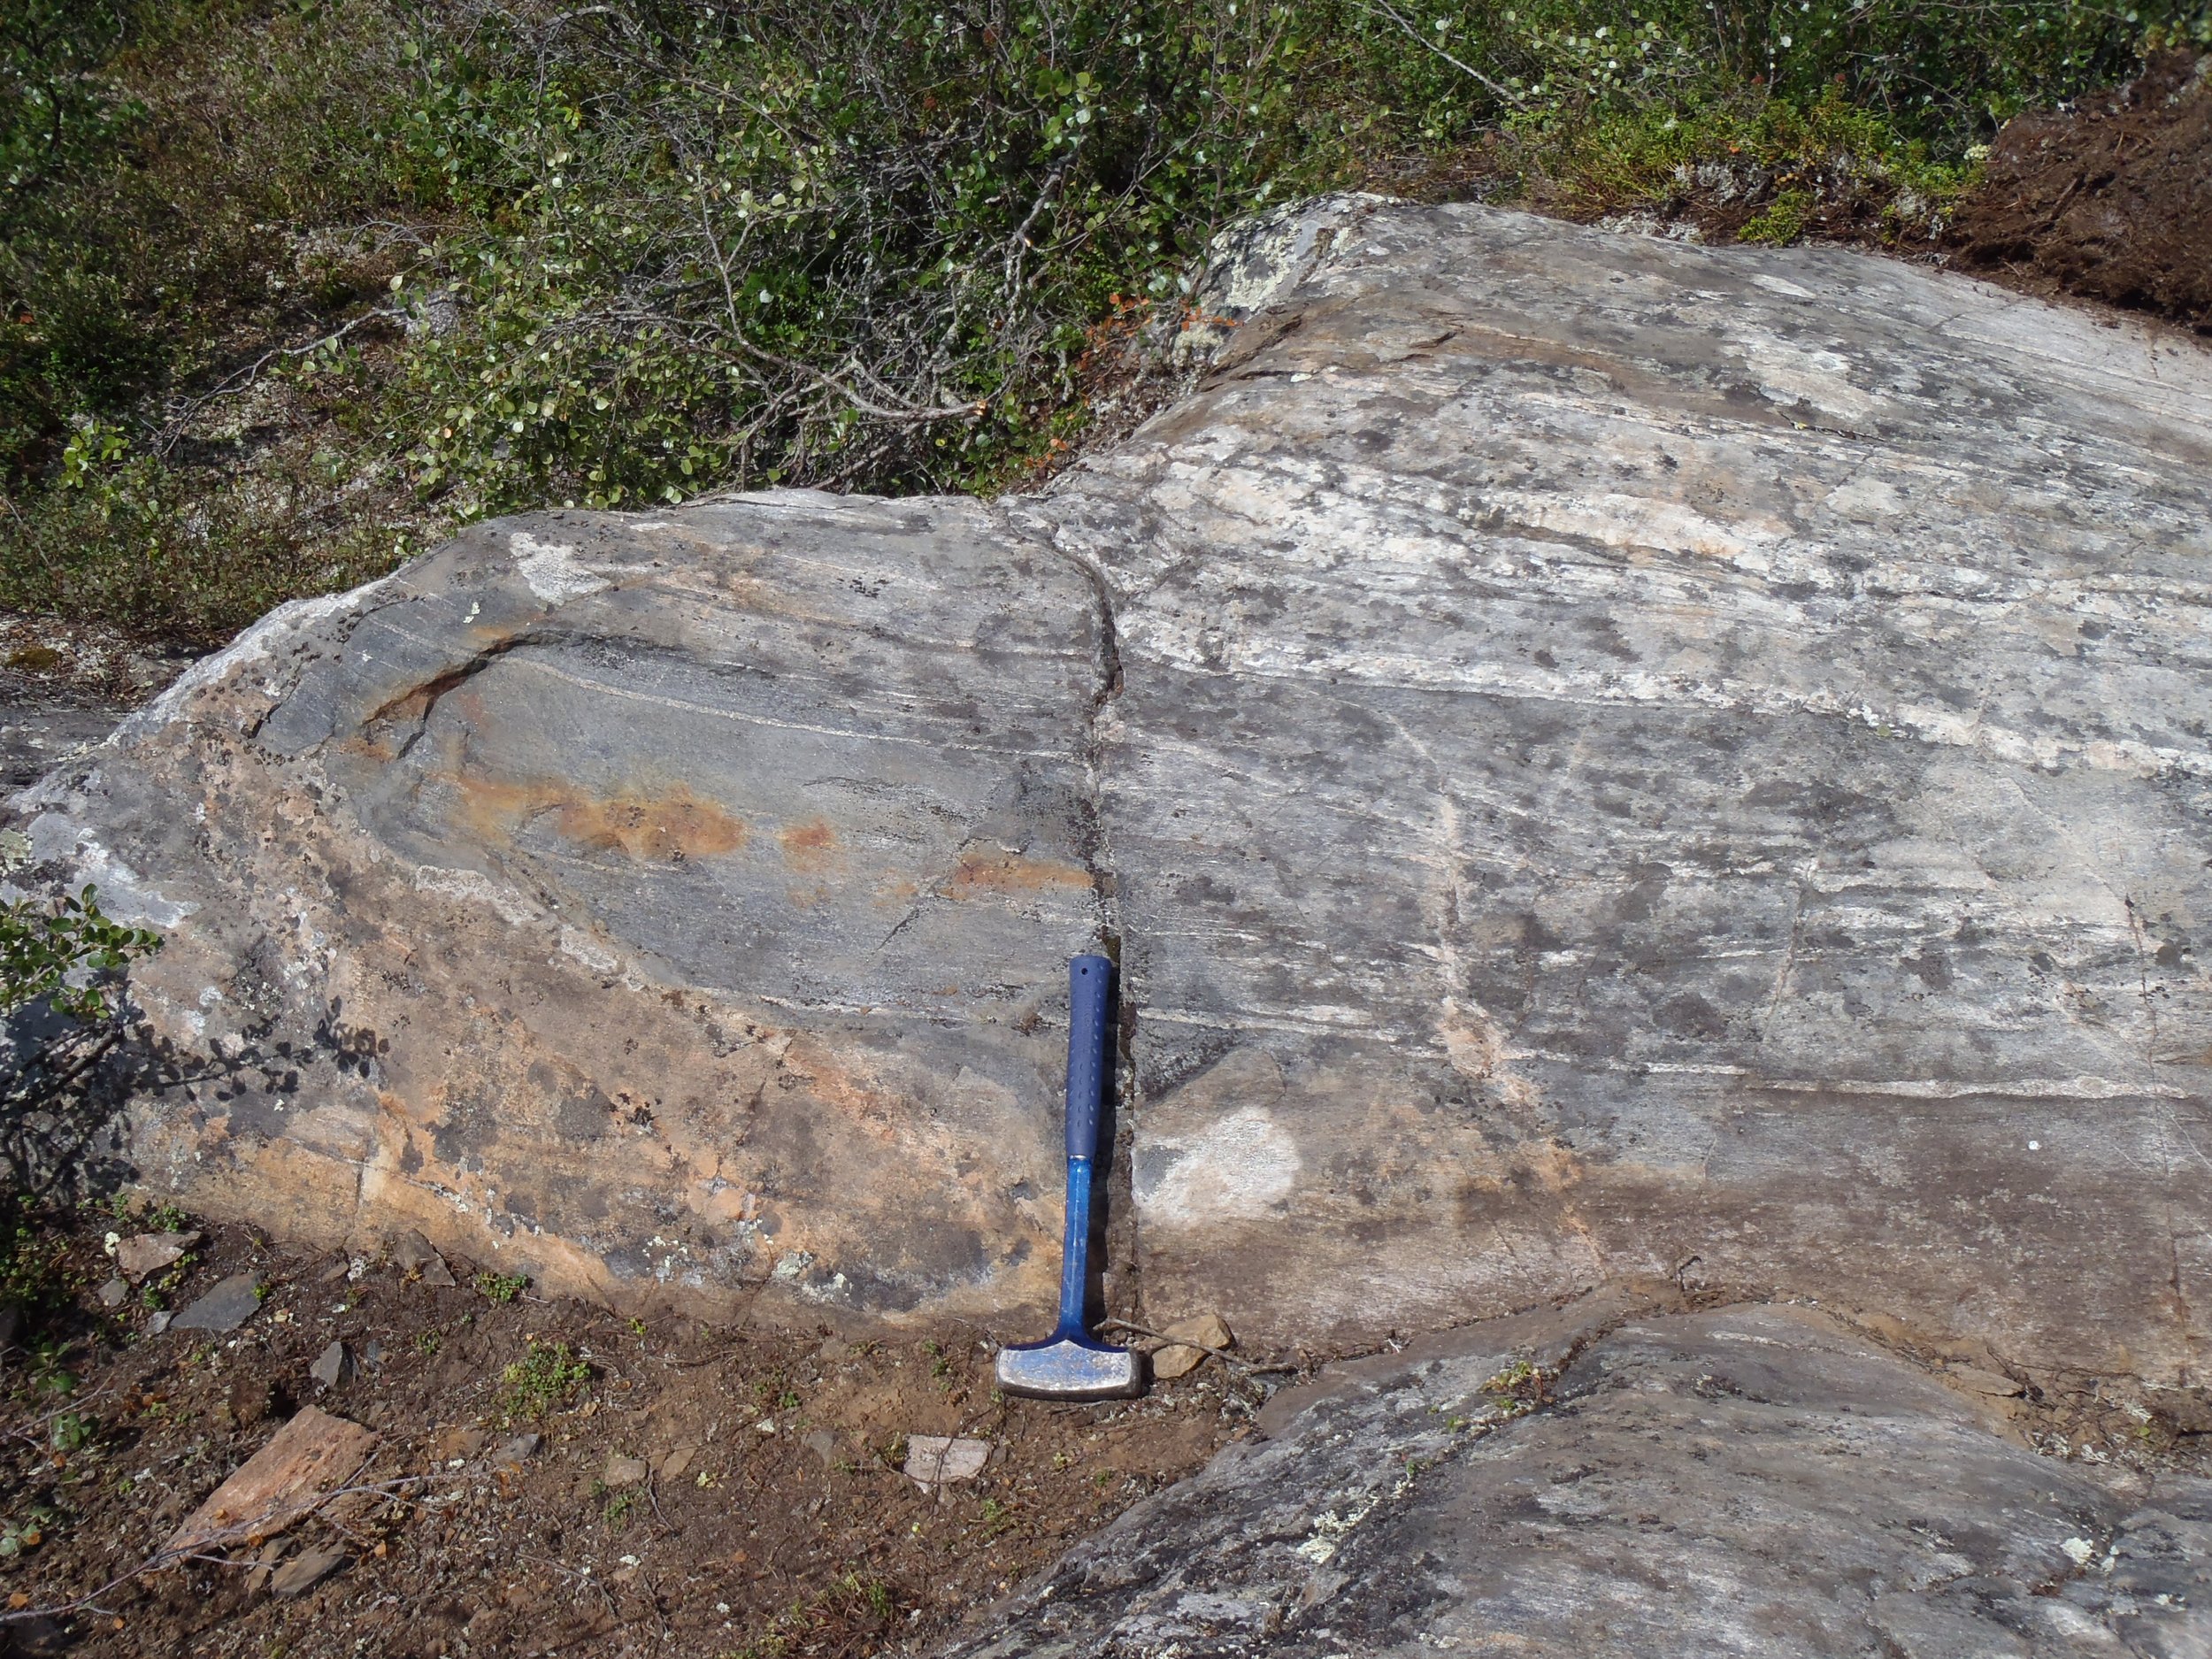 The 4.02 billion-year-old Idiwhaa Tonalitic Gneiss